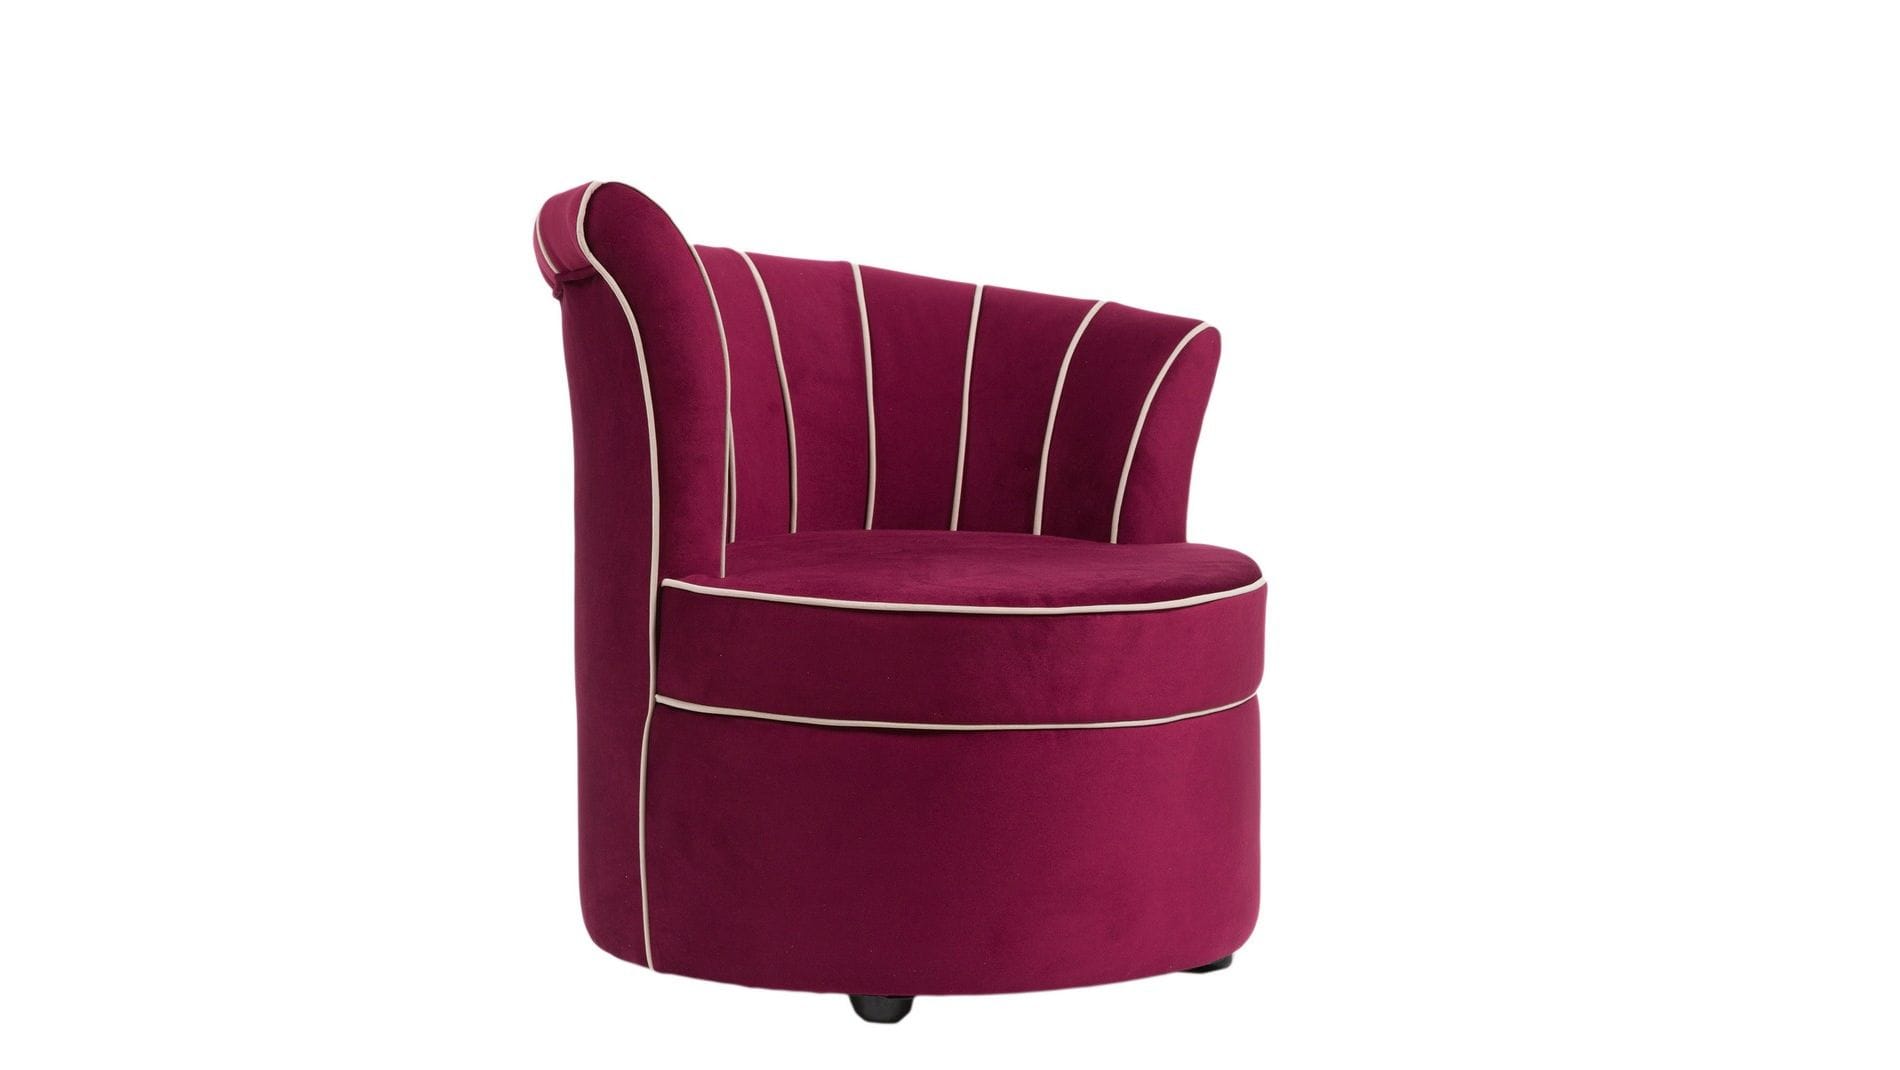 Кресло Shell Фиолетовое Велюр